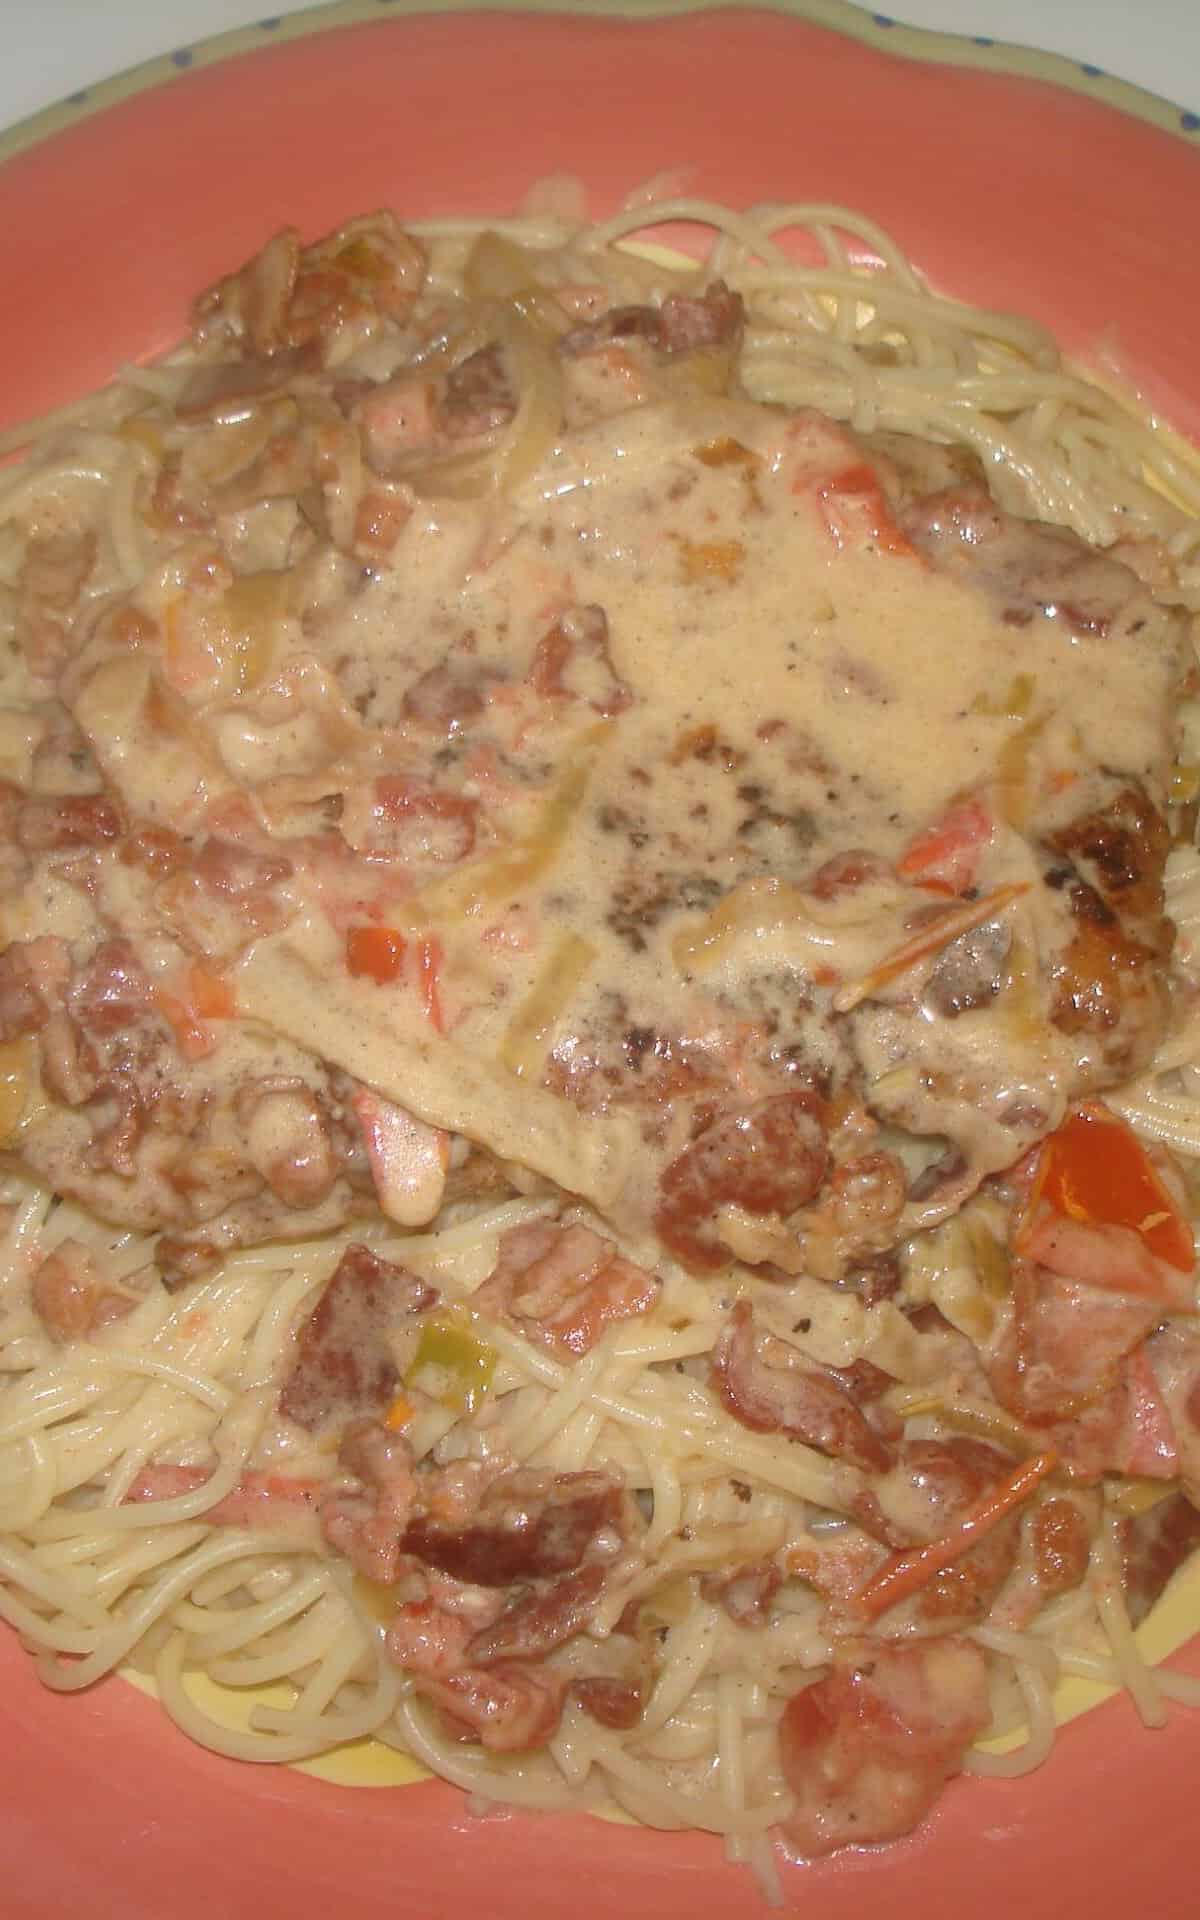 Belinda's Version of Carino's Chicken Scaloppini